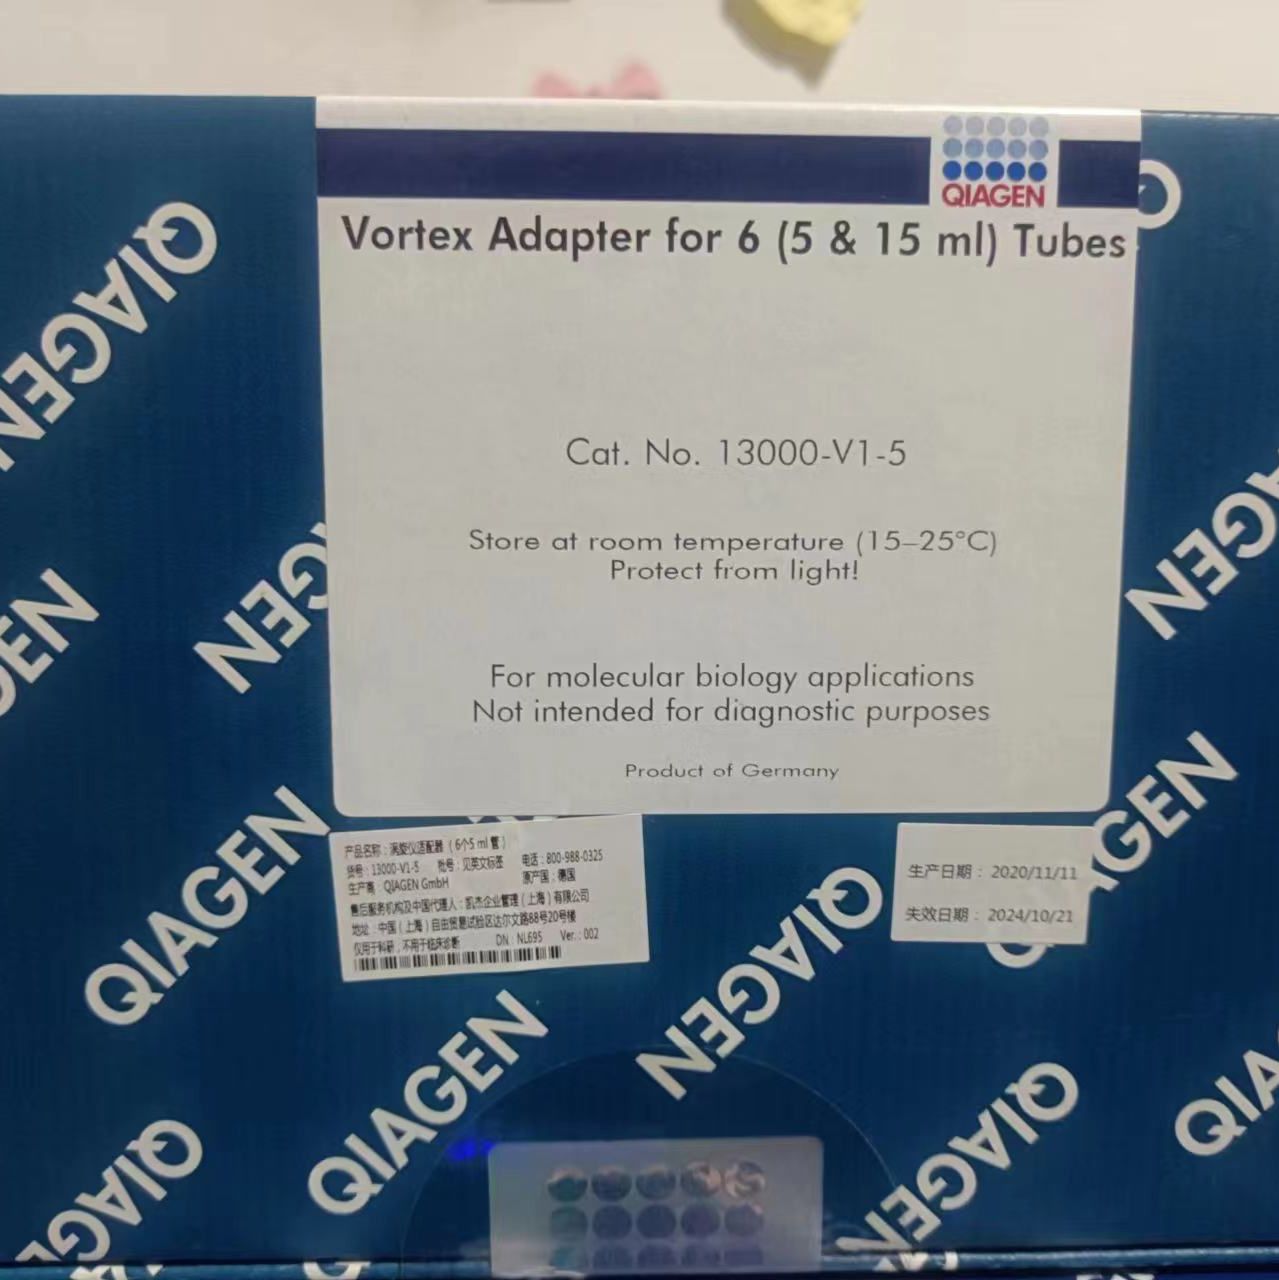 qiagen凯杰一级签约代理商 13000-v1-5 Vortex Adapter for 6 (5 & 15 ml) Tubes